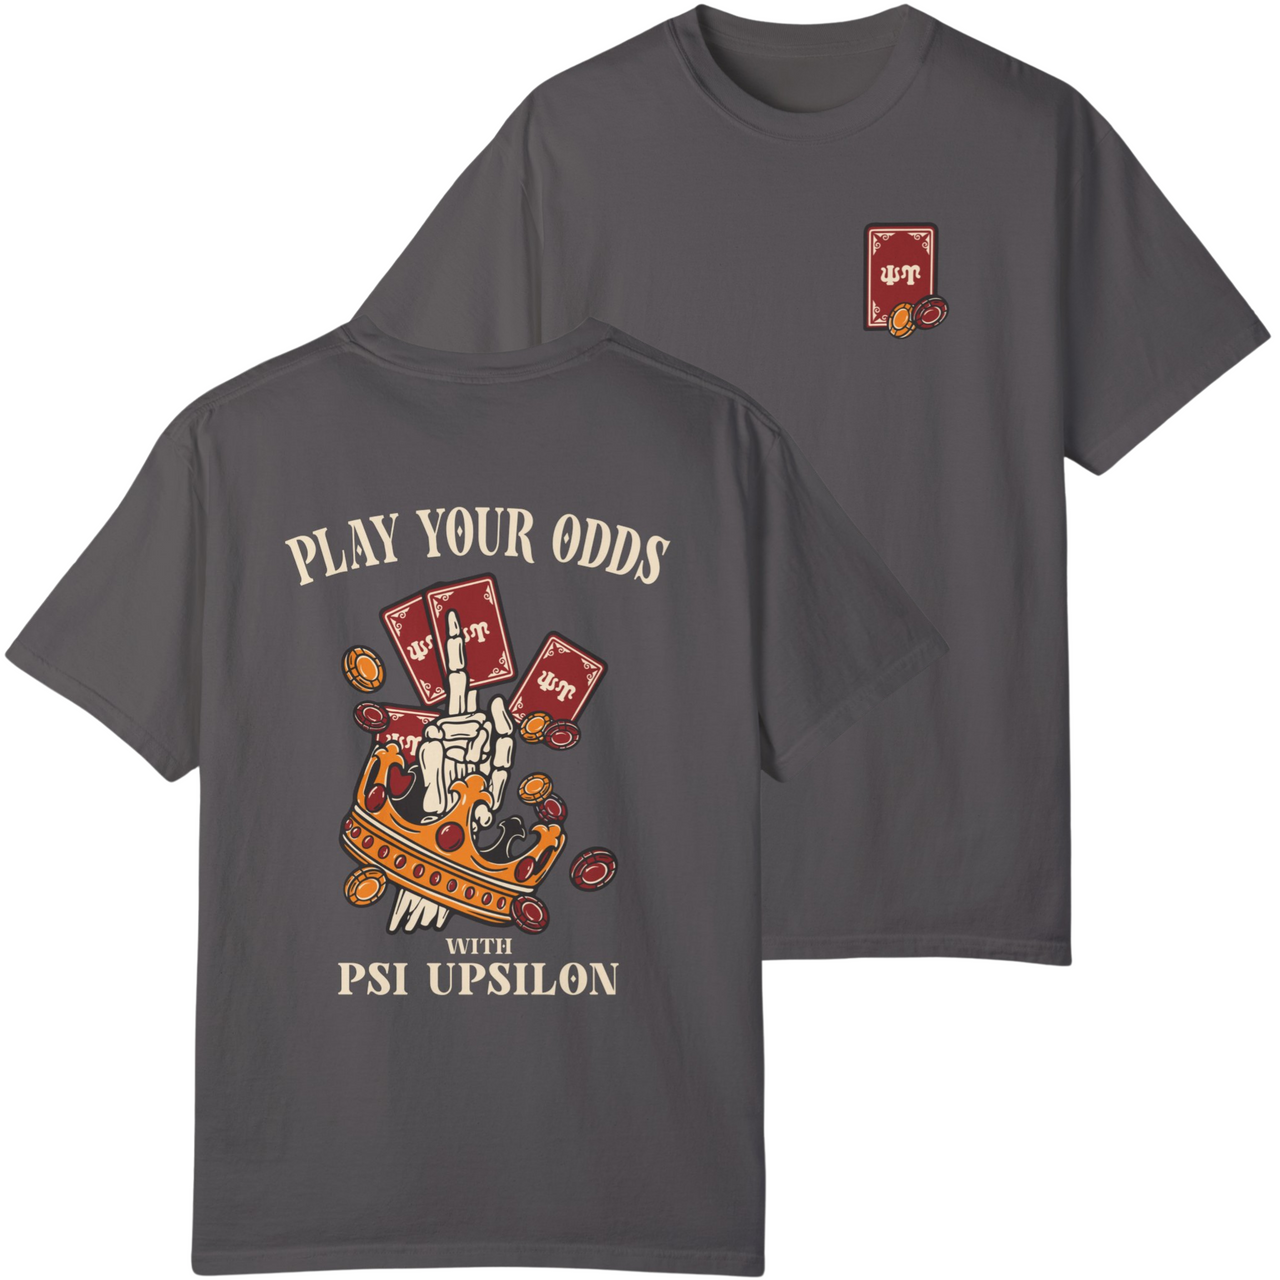 Psi Upsilon Graphic T-Shirt | Play Your Odds